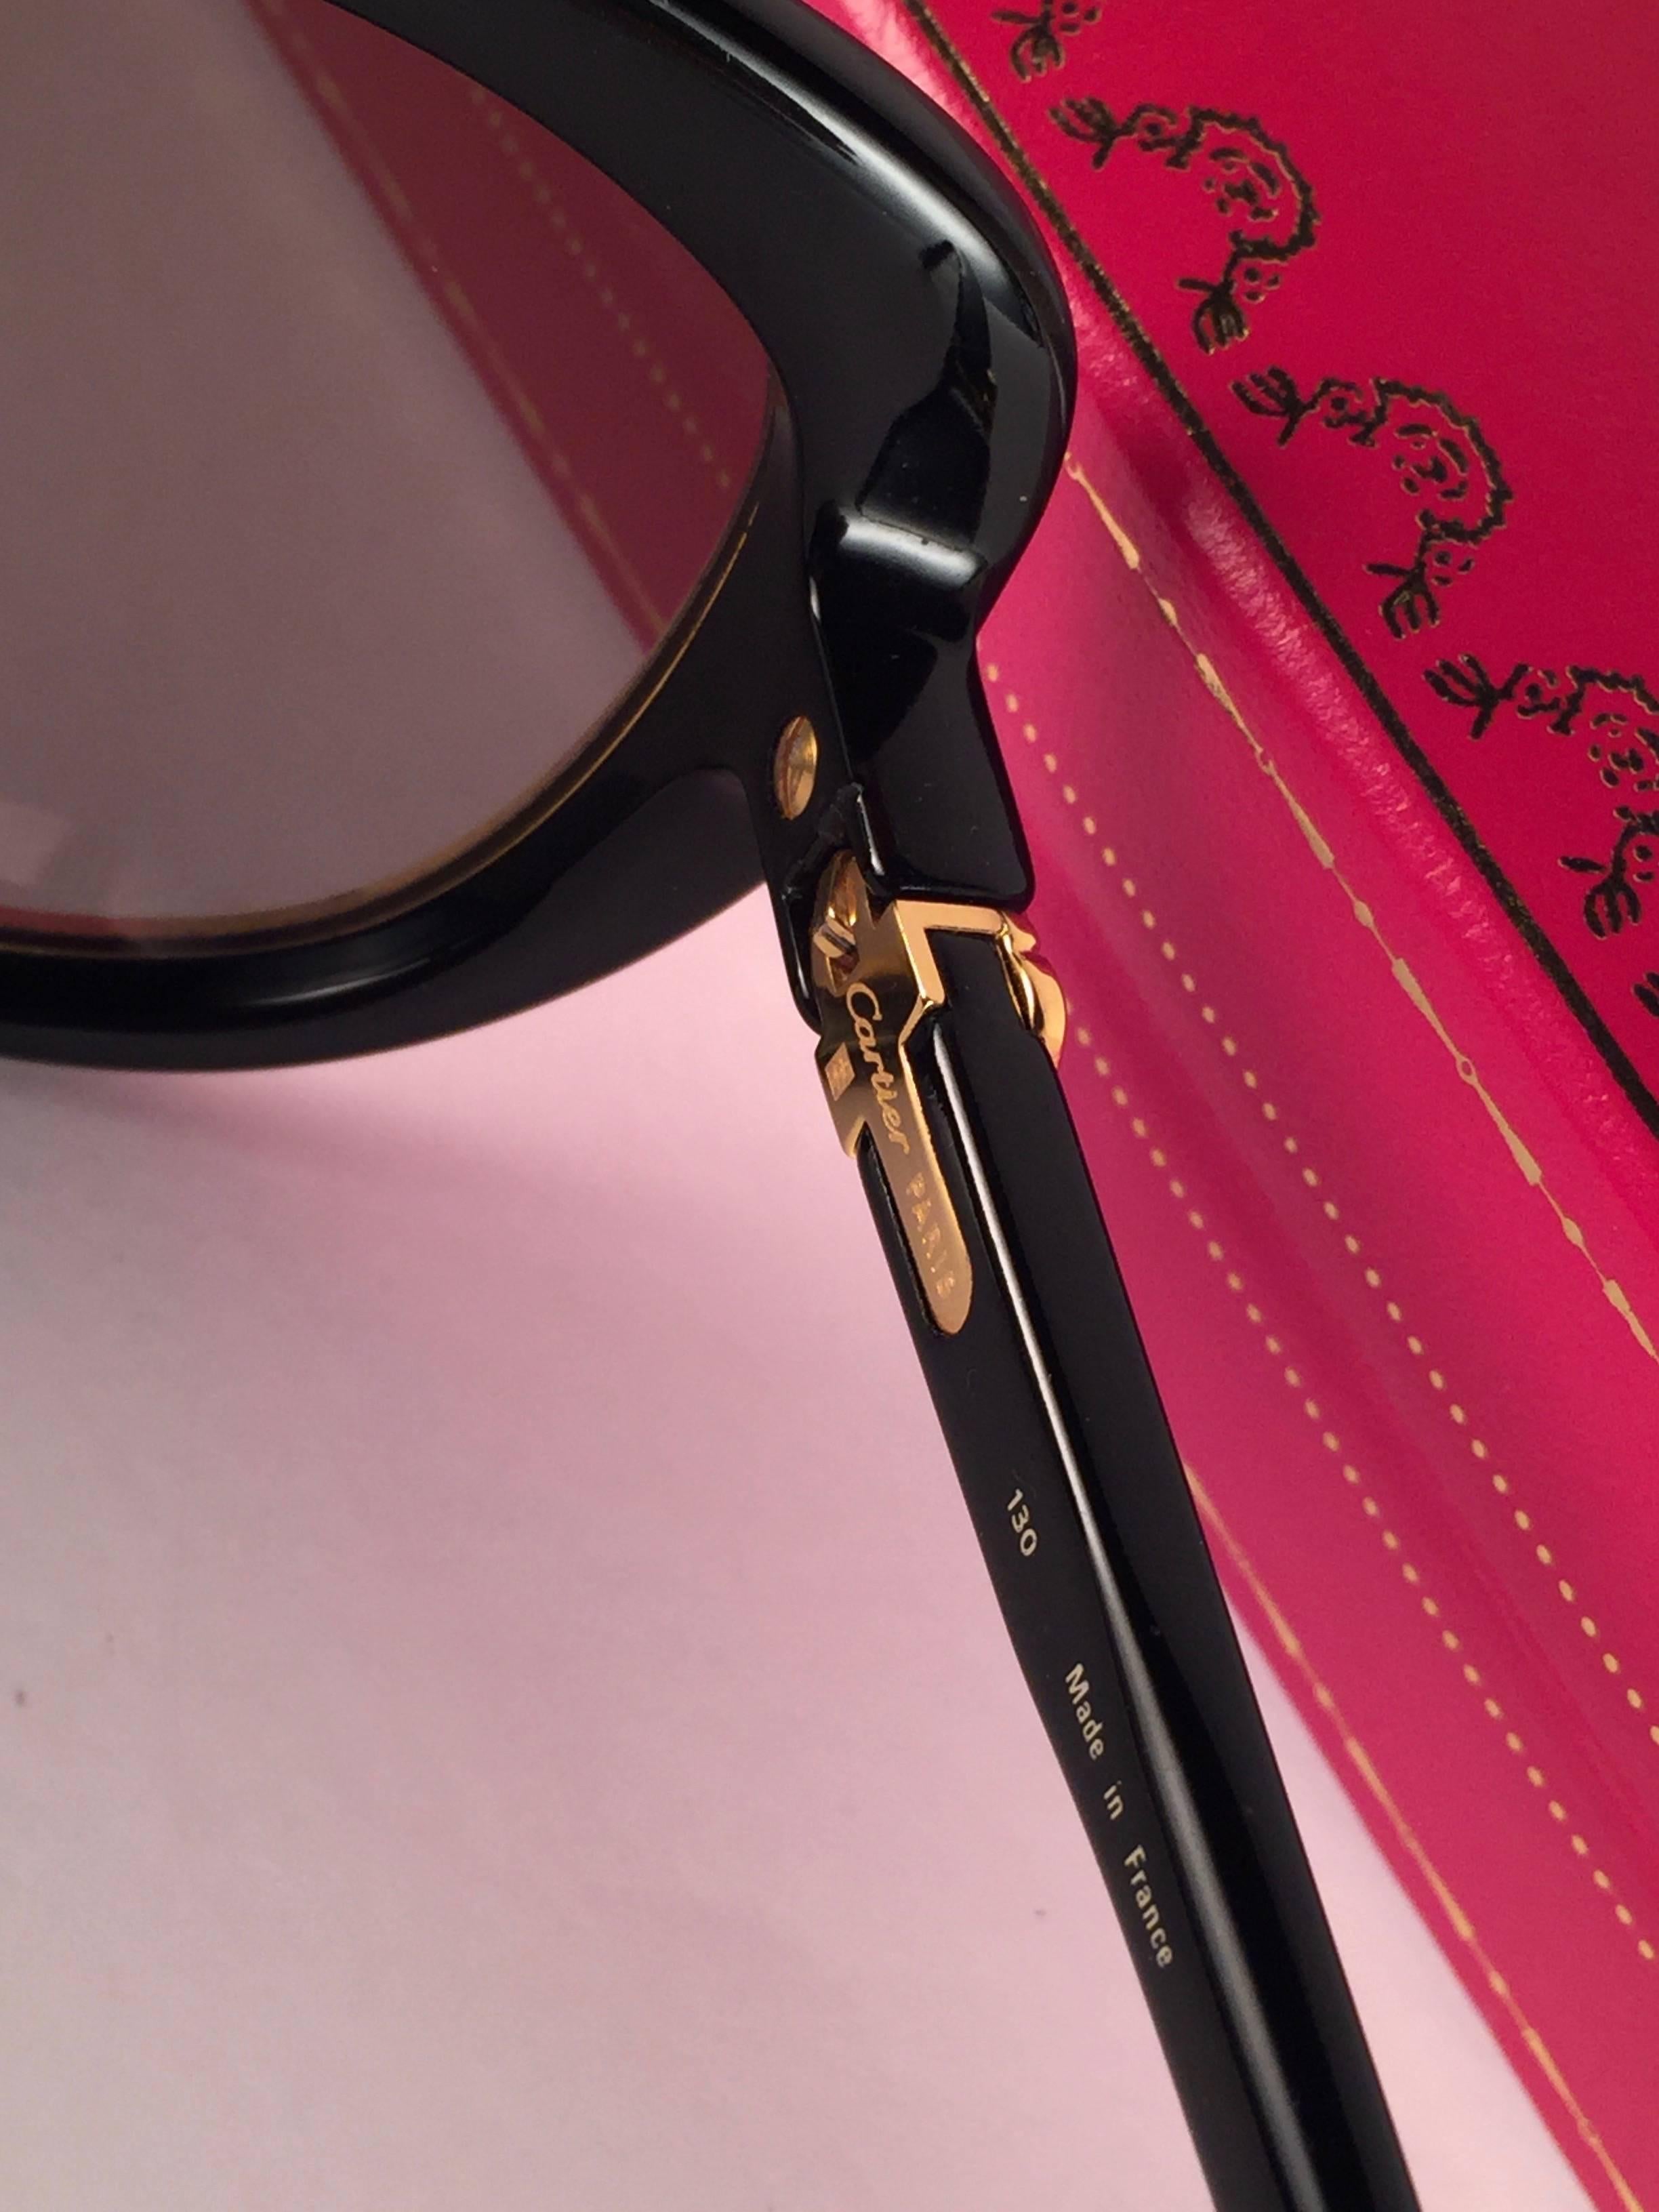  New Vintage Cartier Conquete 51mm Black Gold & Yellow Inserts France Sunglasses Pour femmes 